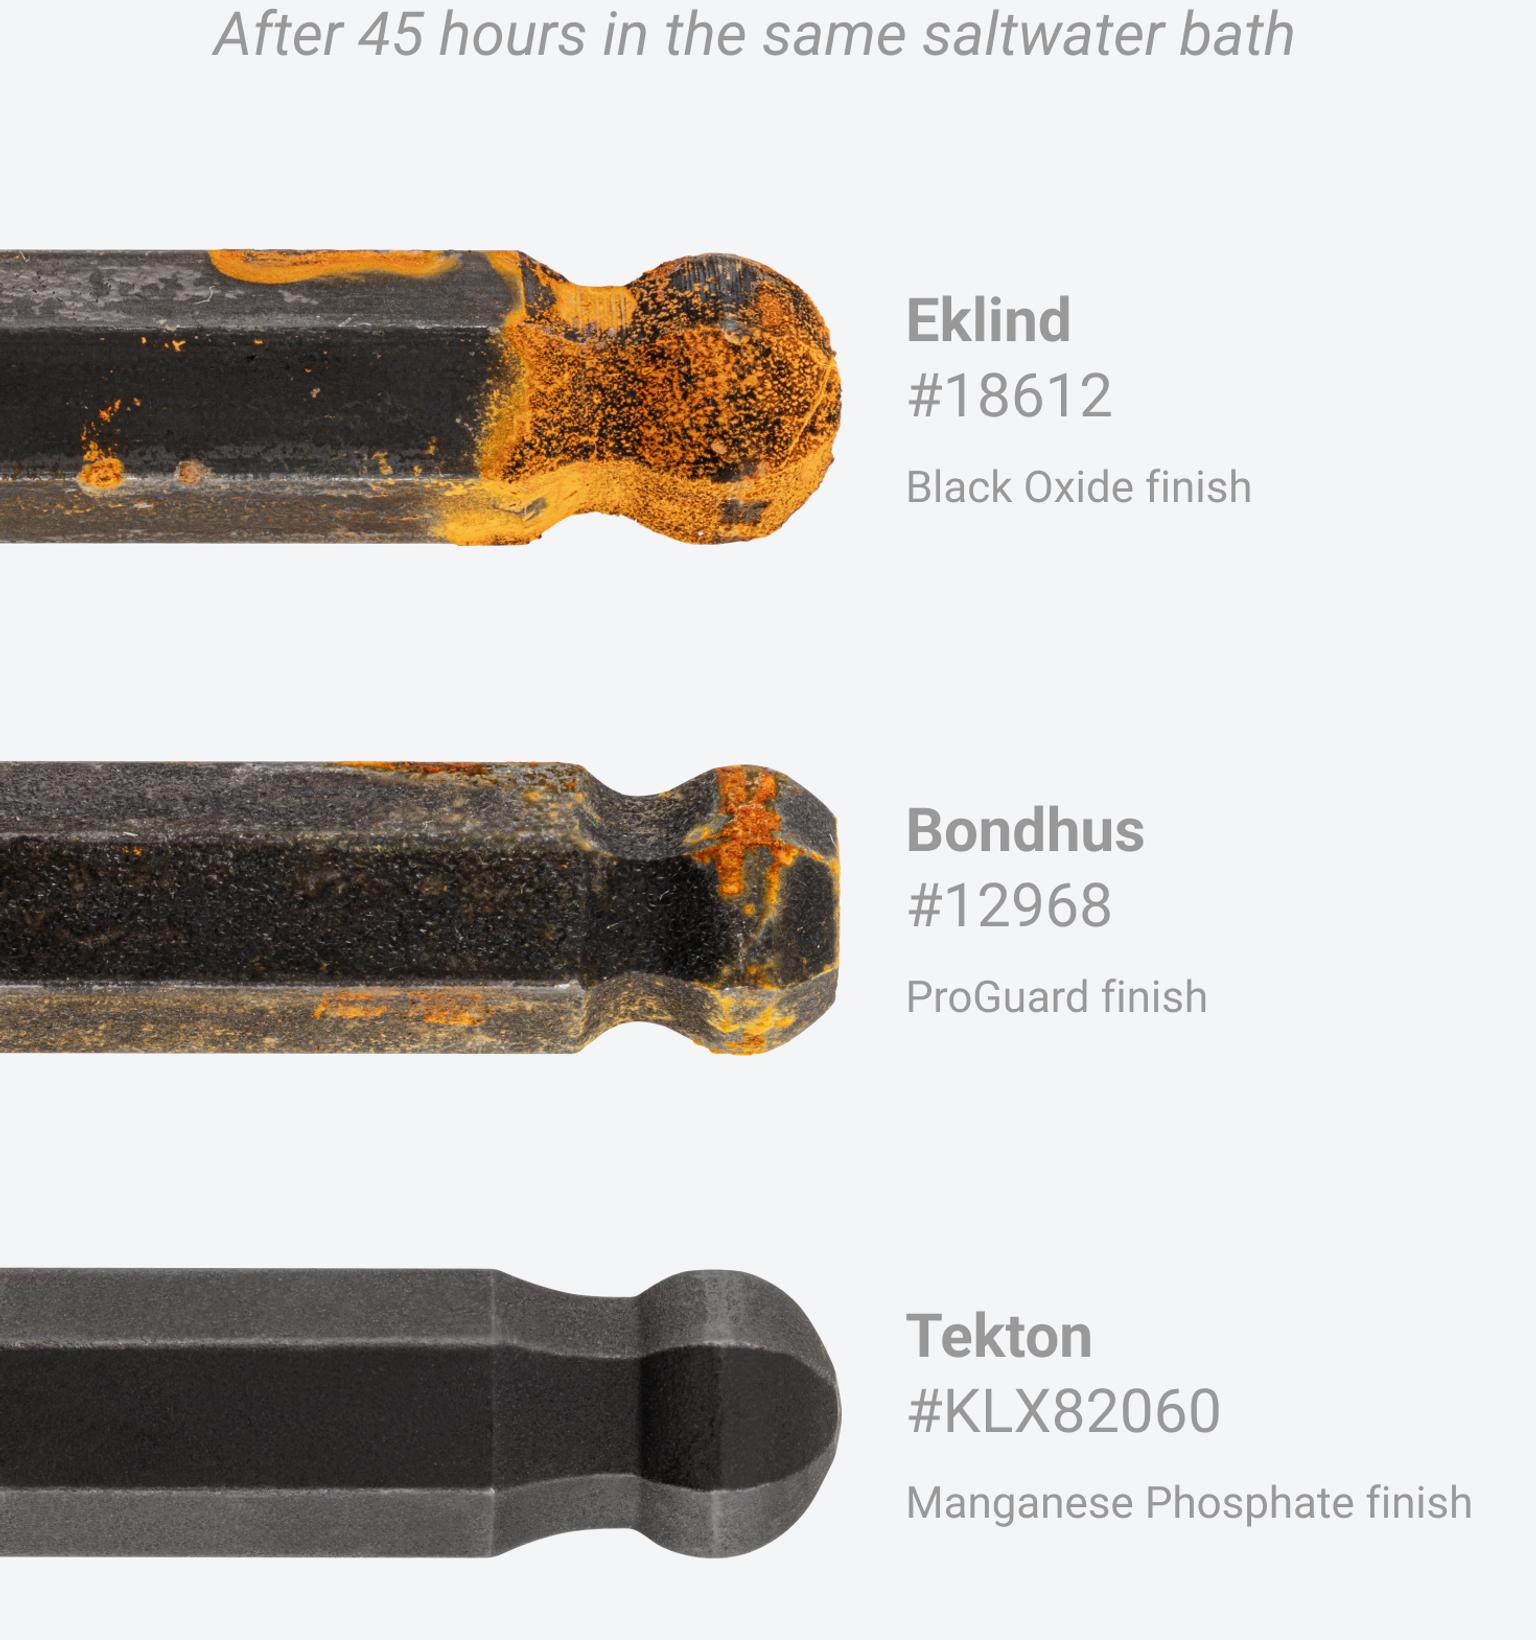 Corroded Eklind and Bondhus ball end hex keys next to Tekton's Key with corrosion-resistant finish.